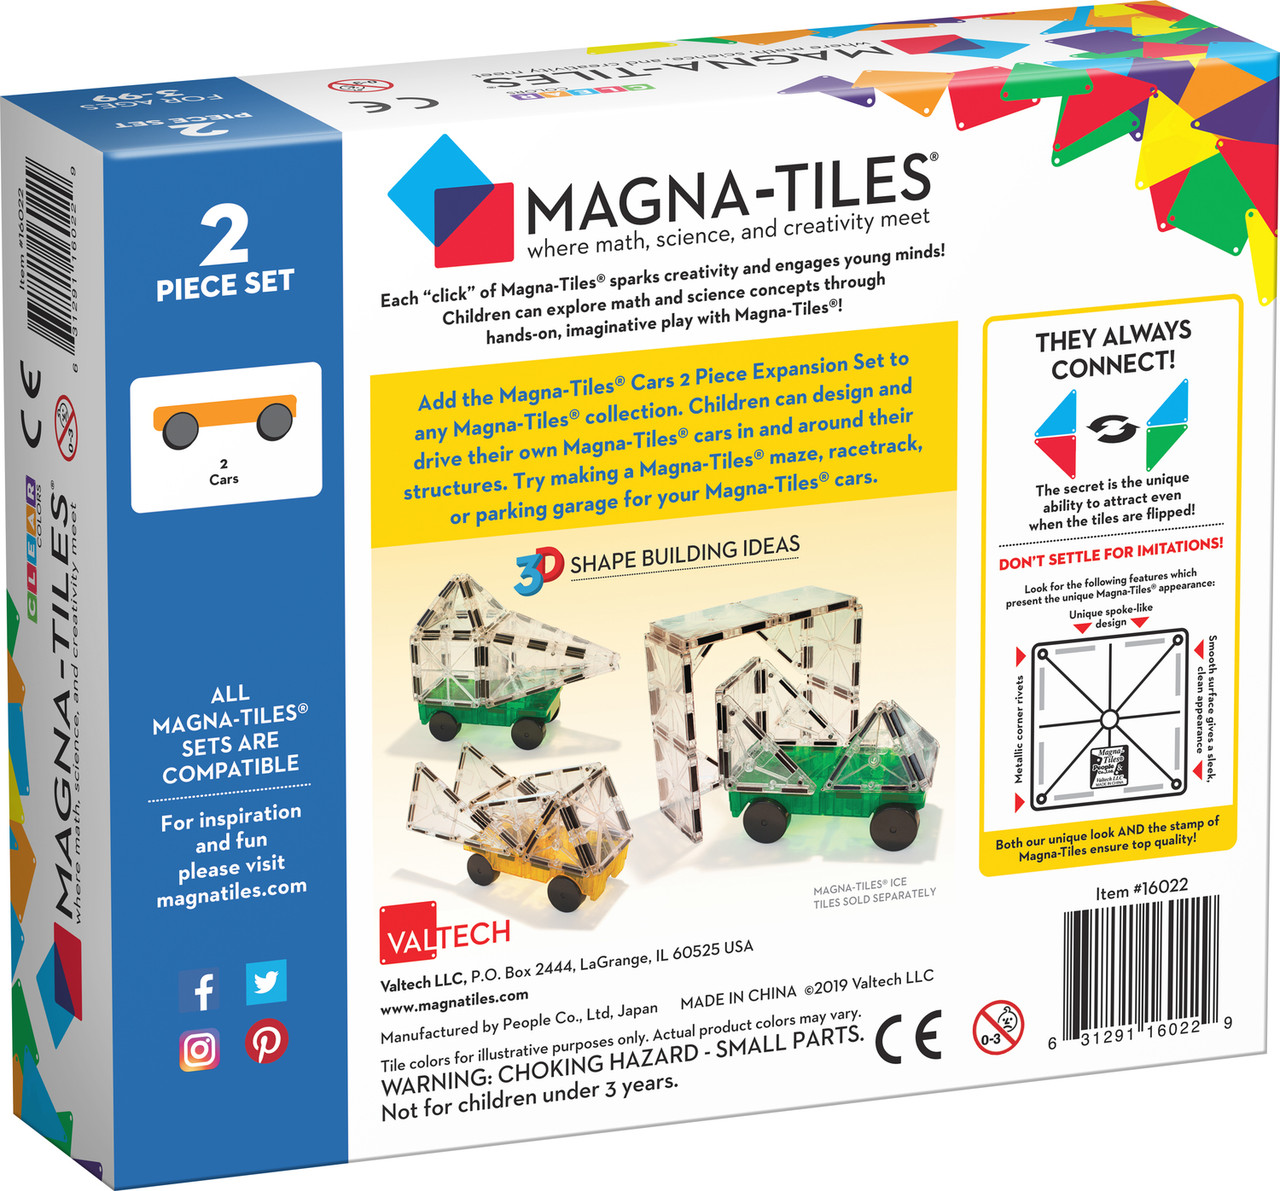 Magna-Tiles Cars 2 Piece Expansion Set 1